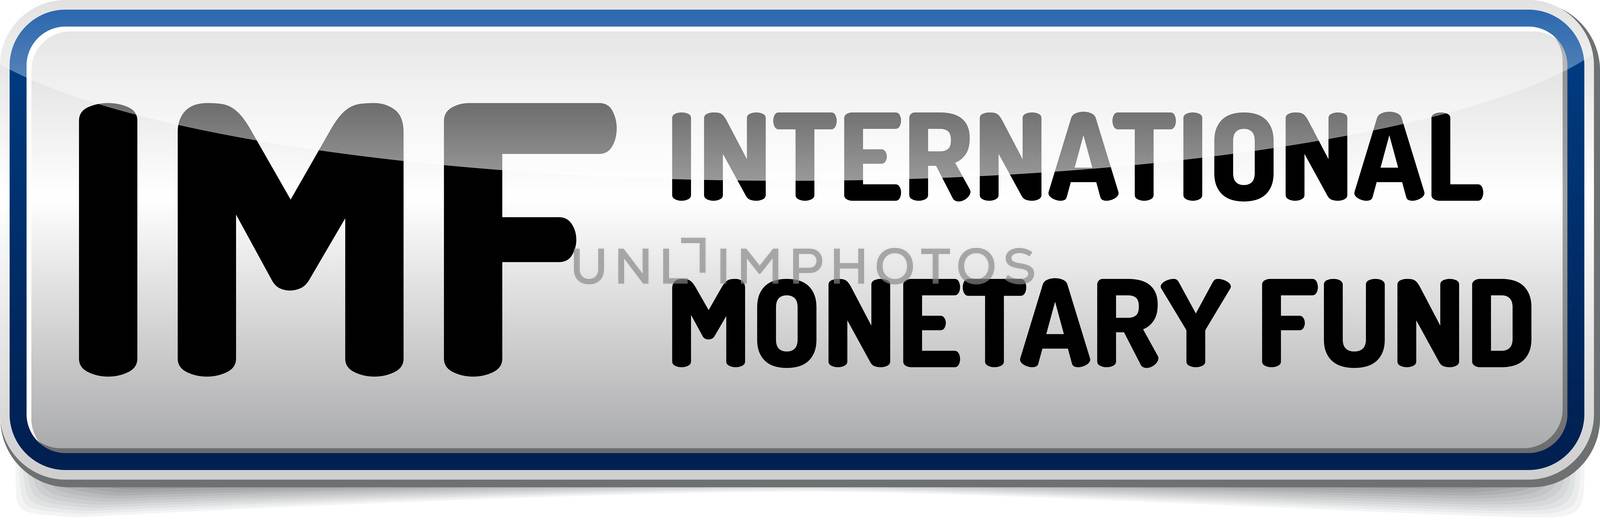 IMF International Monetary Fund, World Bank by akaprinay